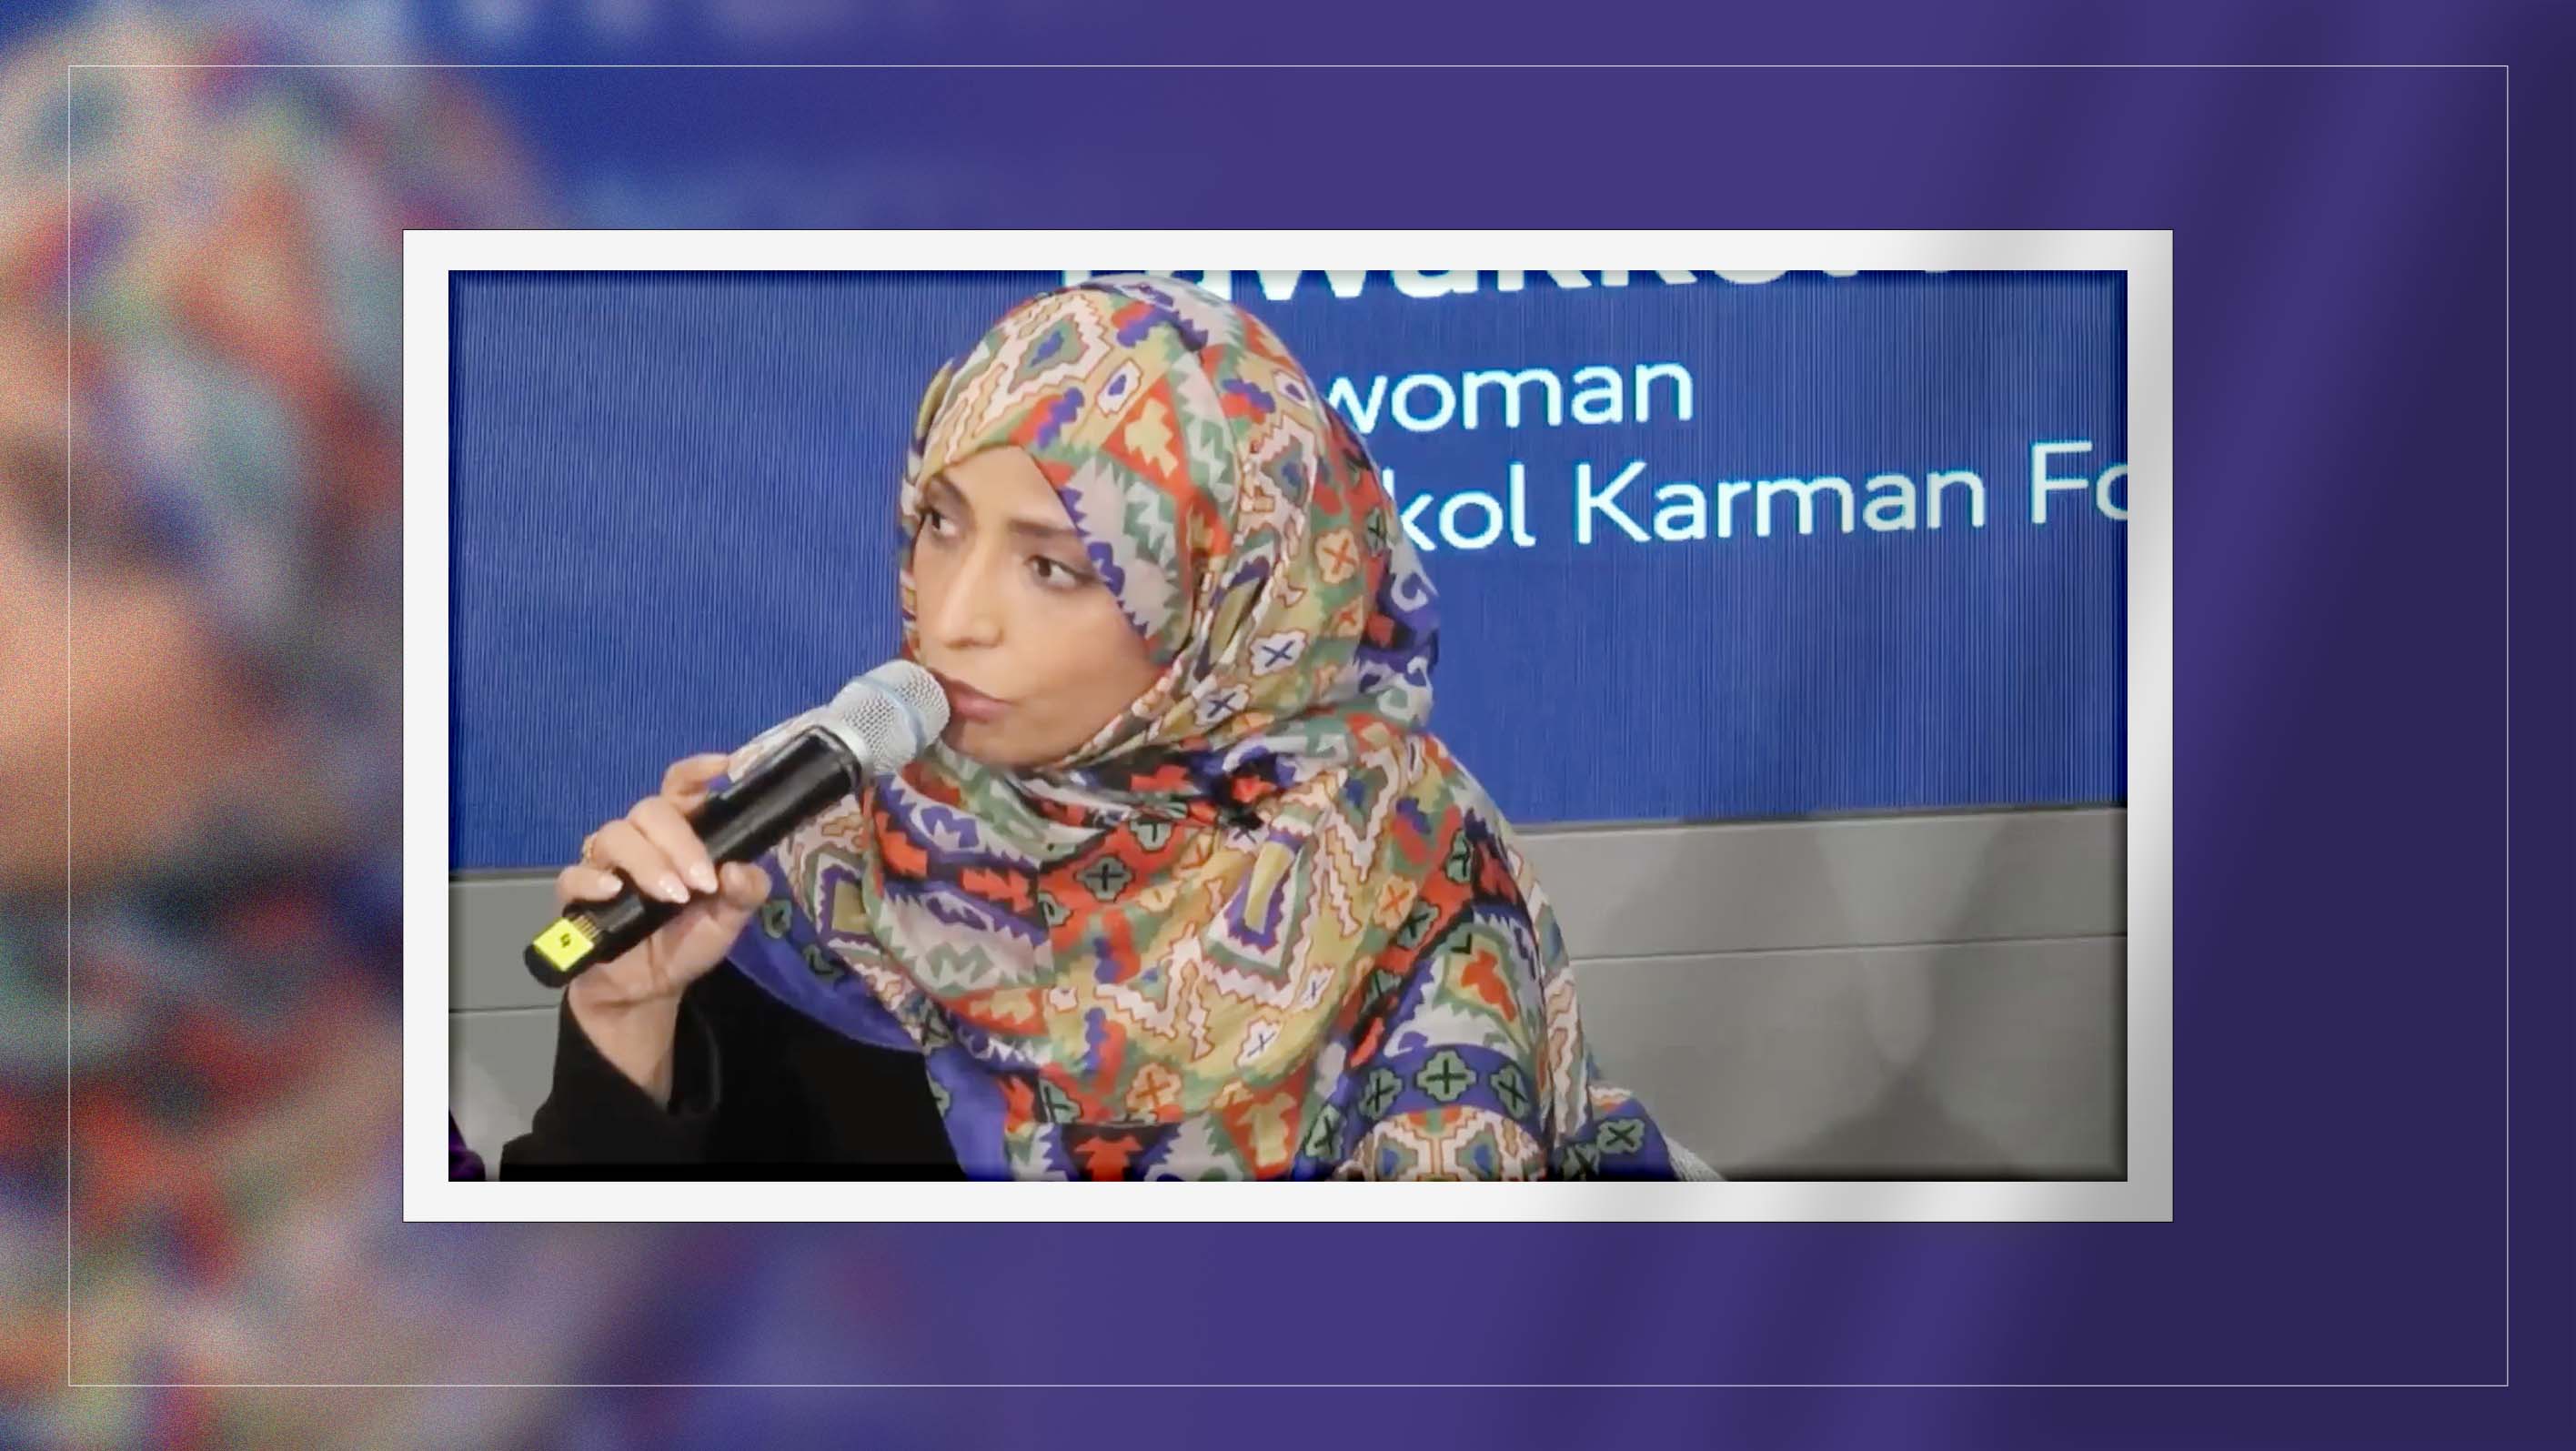 Nobel laureate Karman sounds alarm on democracy's future at 2024 MSC 